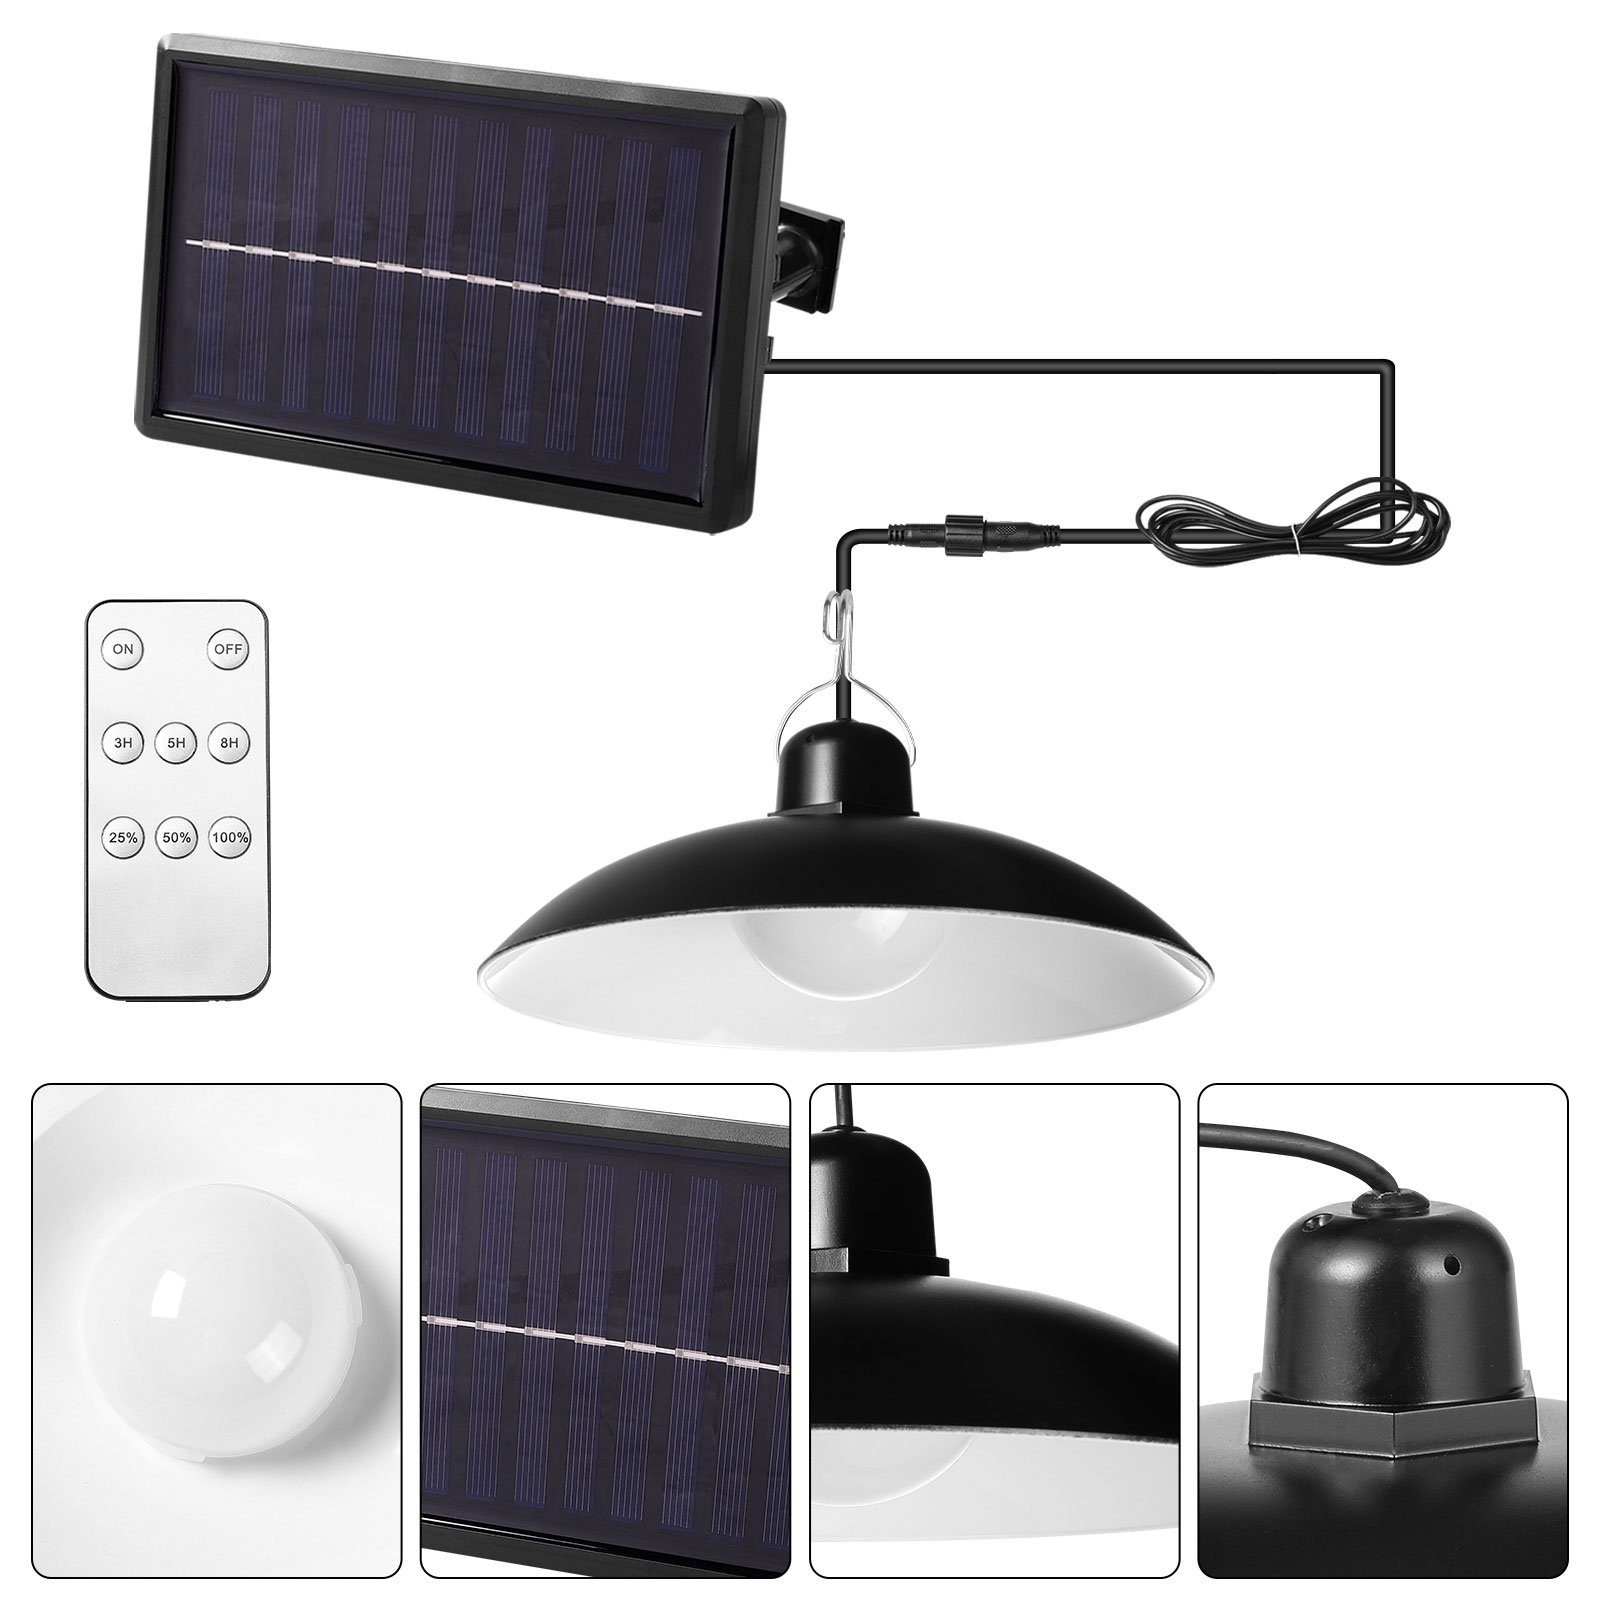 Rosnek LED Solarleuchte Solar Hängelampen für Außen & Innen, Solarlampen für Außen, LED, Warm weiß, Weiß, IP65 Wasserdicht Solar Hängelampe mit Fernbedienung, Garten Terrassen